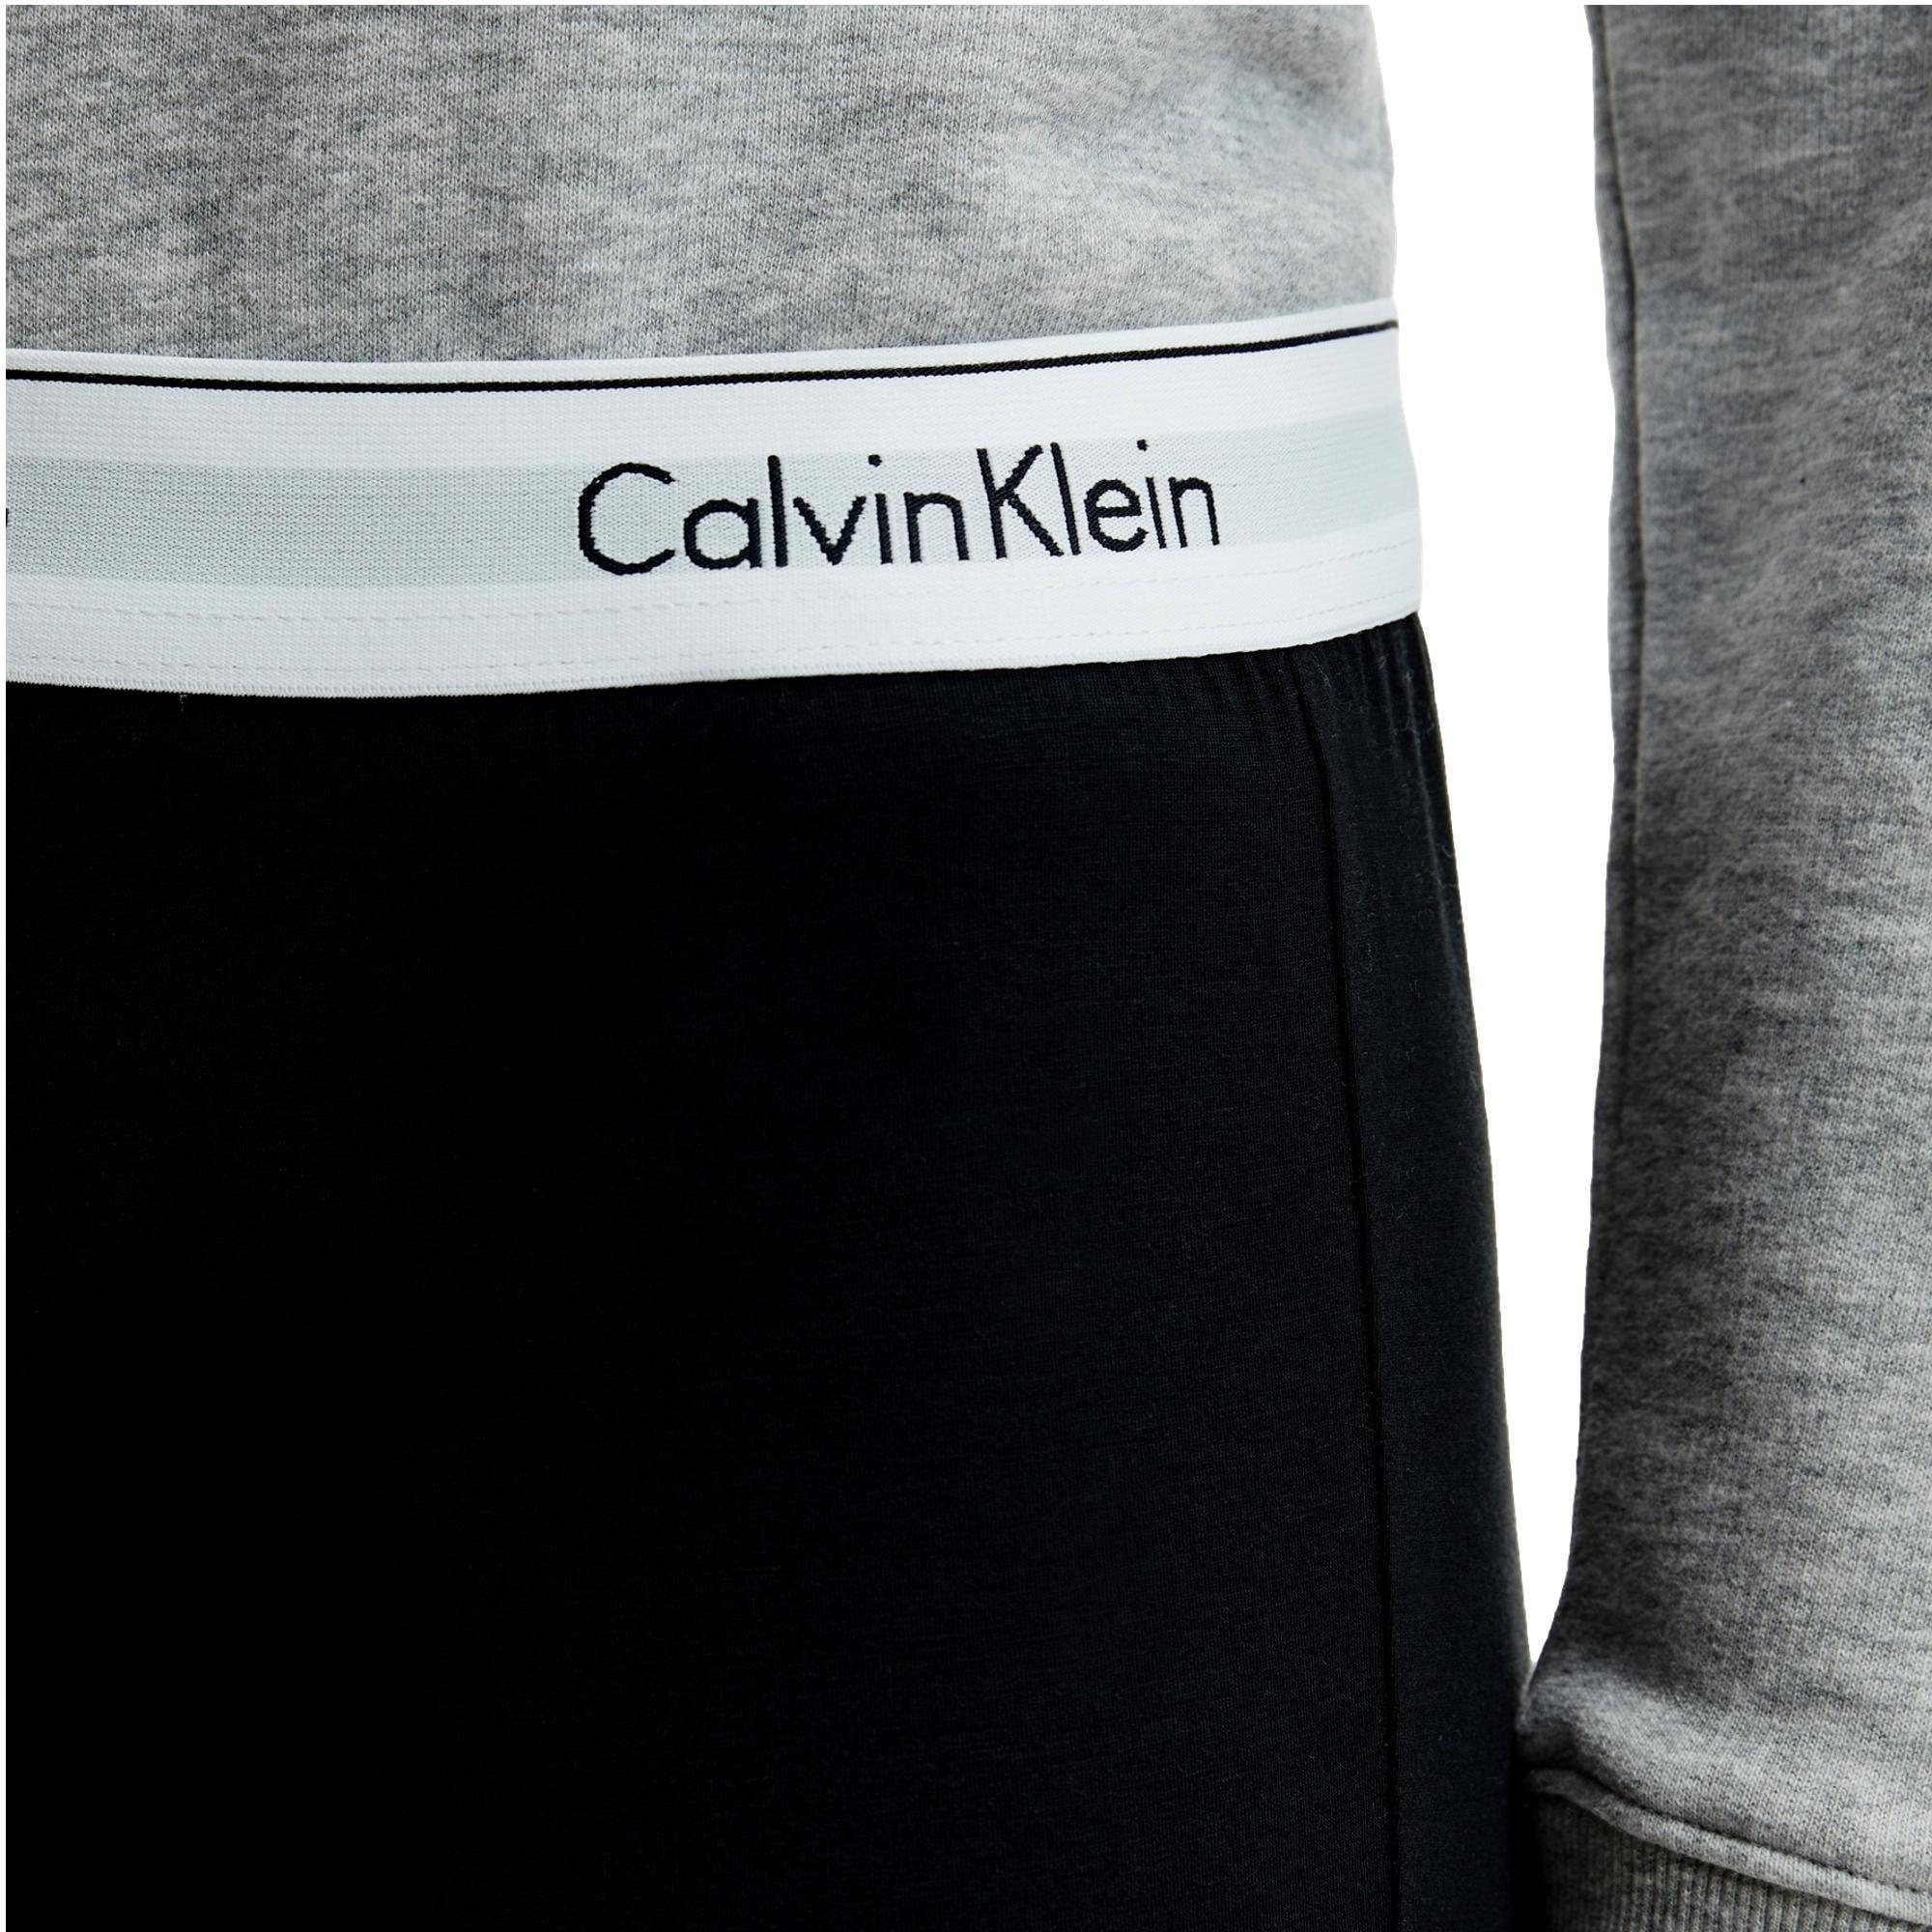 Calvin Klein Women's Modern Cotton Legging, Black, Medium at